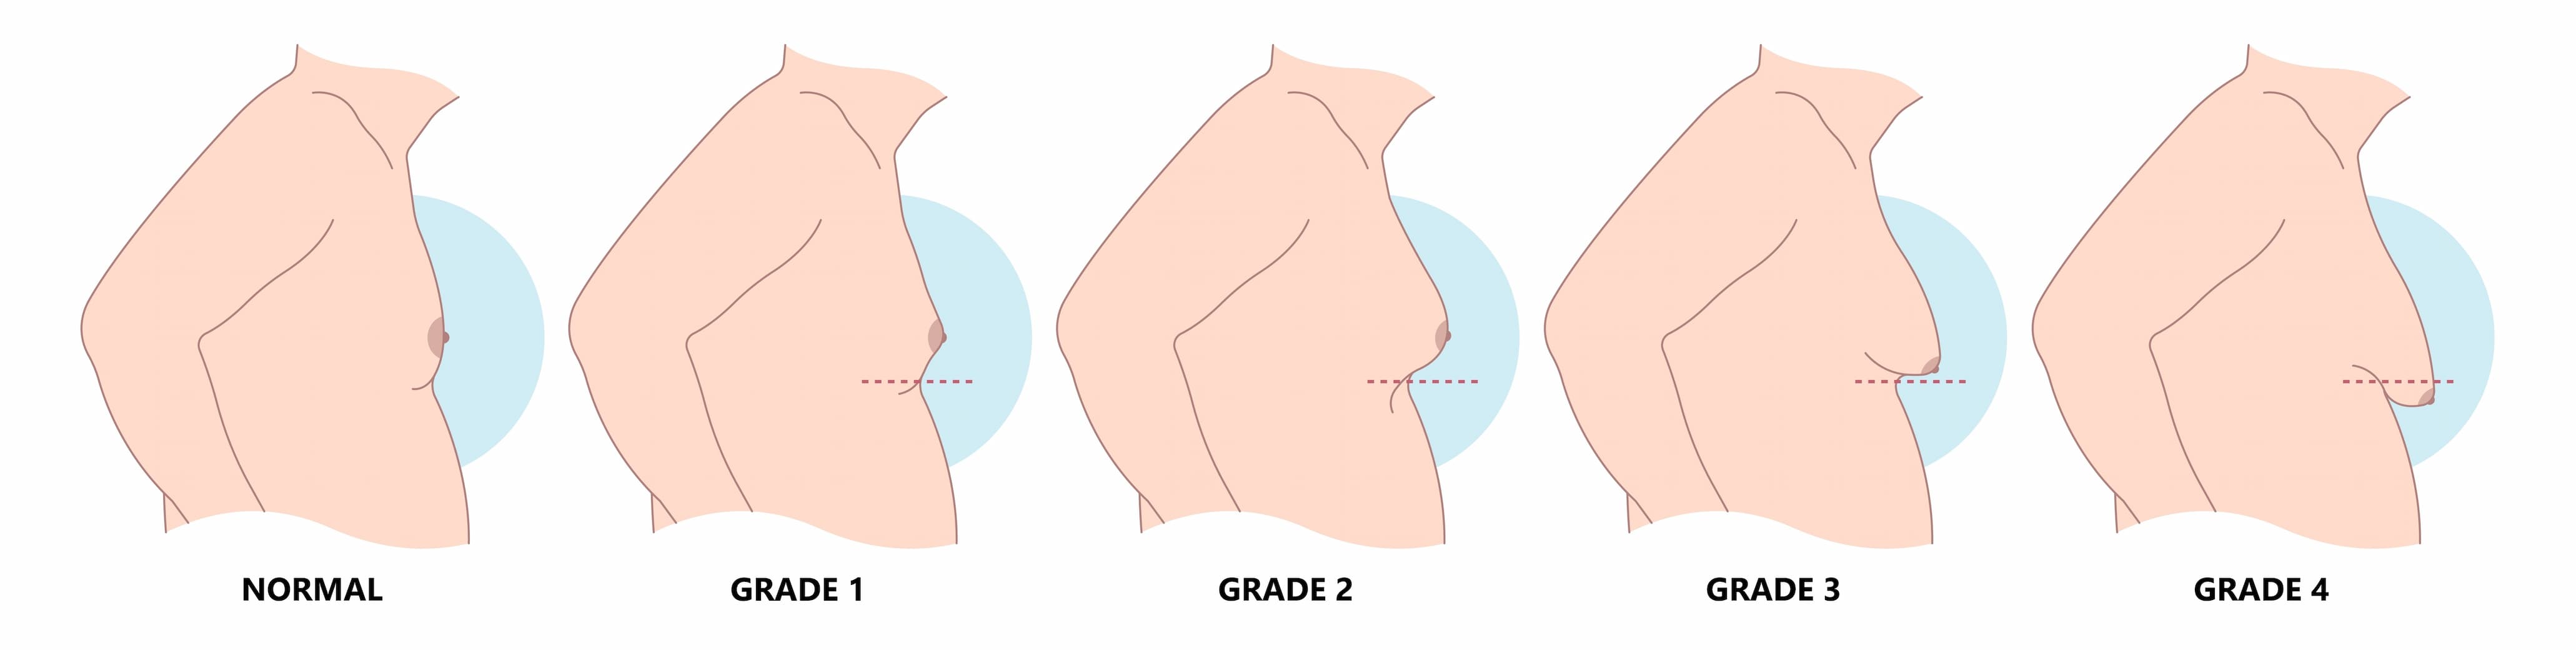 gynecomastia stages